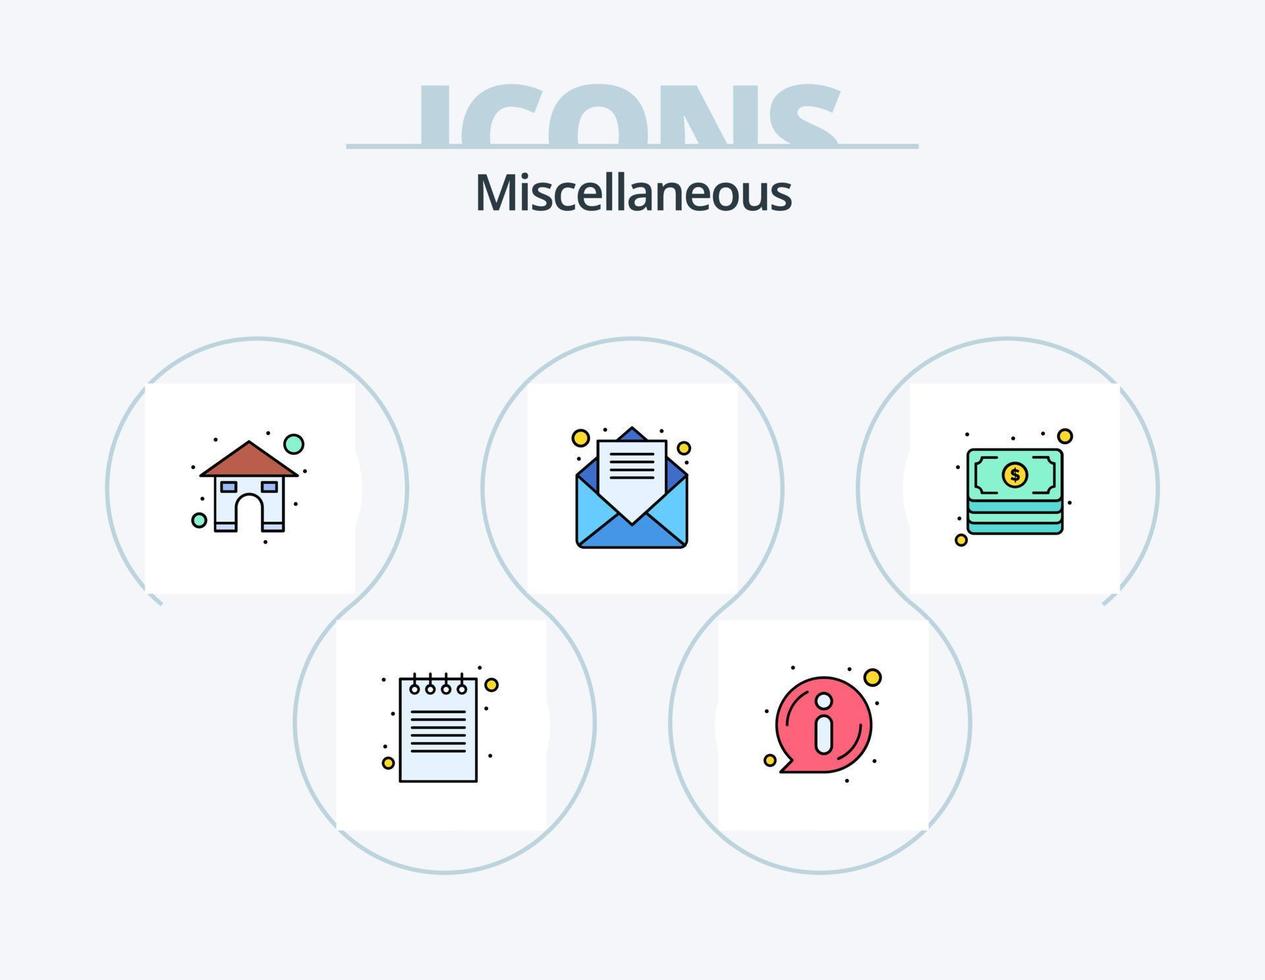 paquete de iconos llenos de línea miscelánea 5 diseño de iconos. cuadro. computadora. solución. enchufar vector